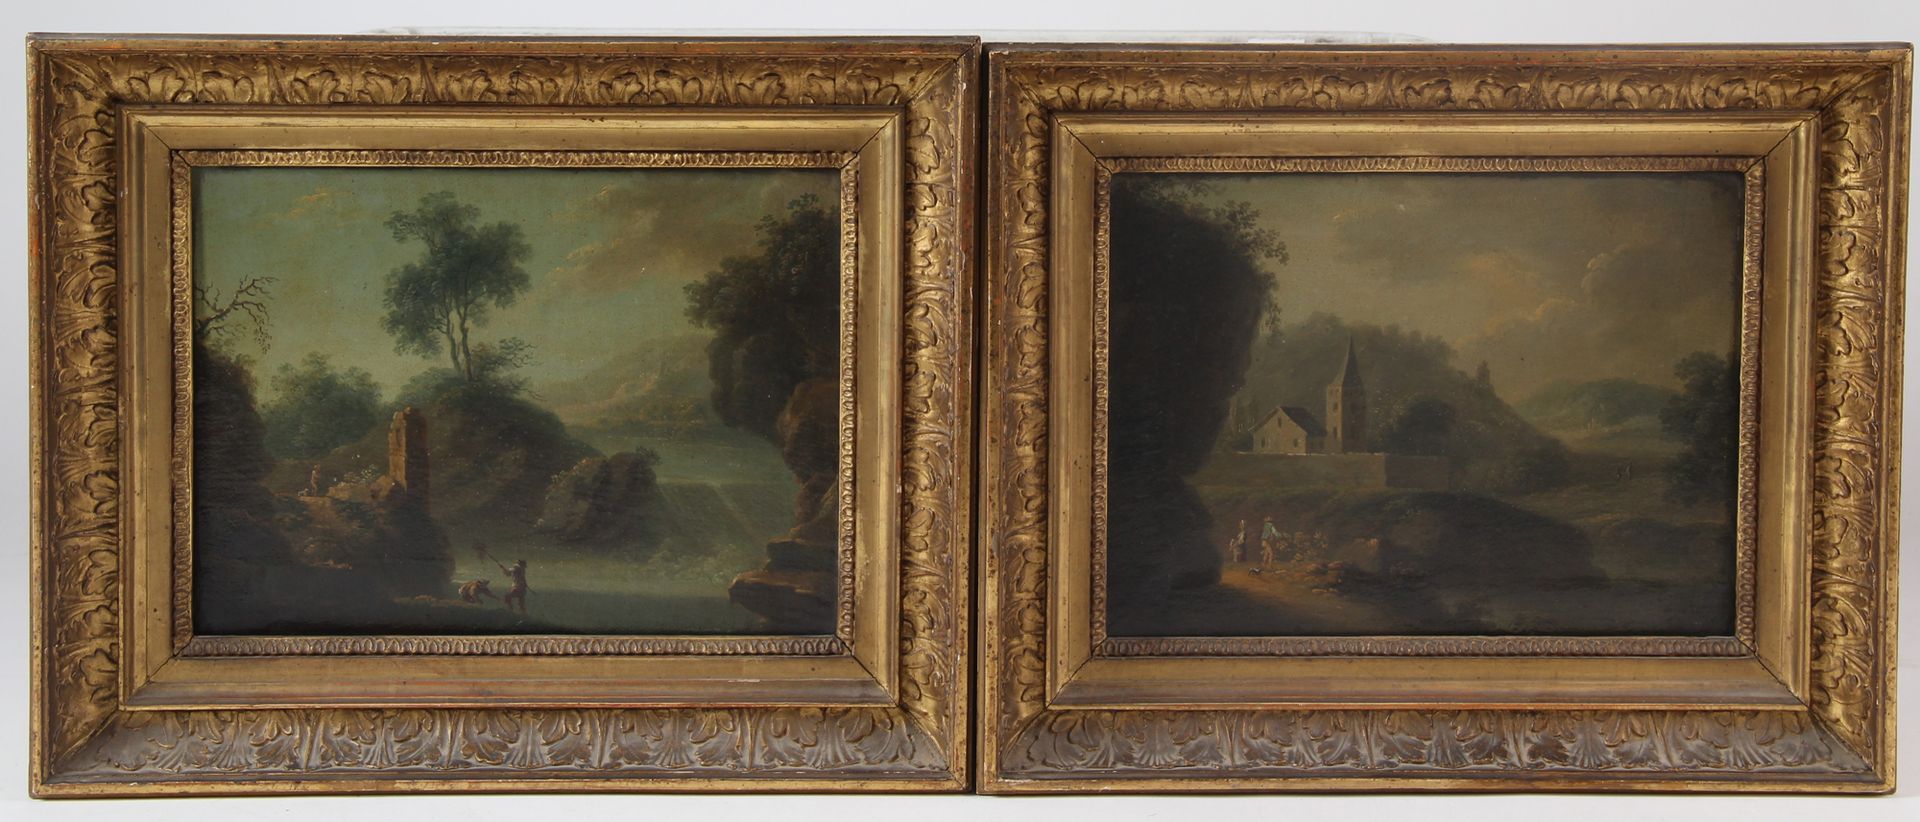 Null 十八世纪末至十九世纪初的法国学校

两幅画： 

- 瀑布边的渔夫"。

-建筑景观

布面油画 

尺寸：19,5 x 26,5 cm